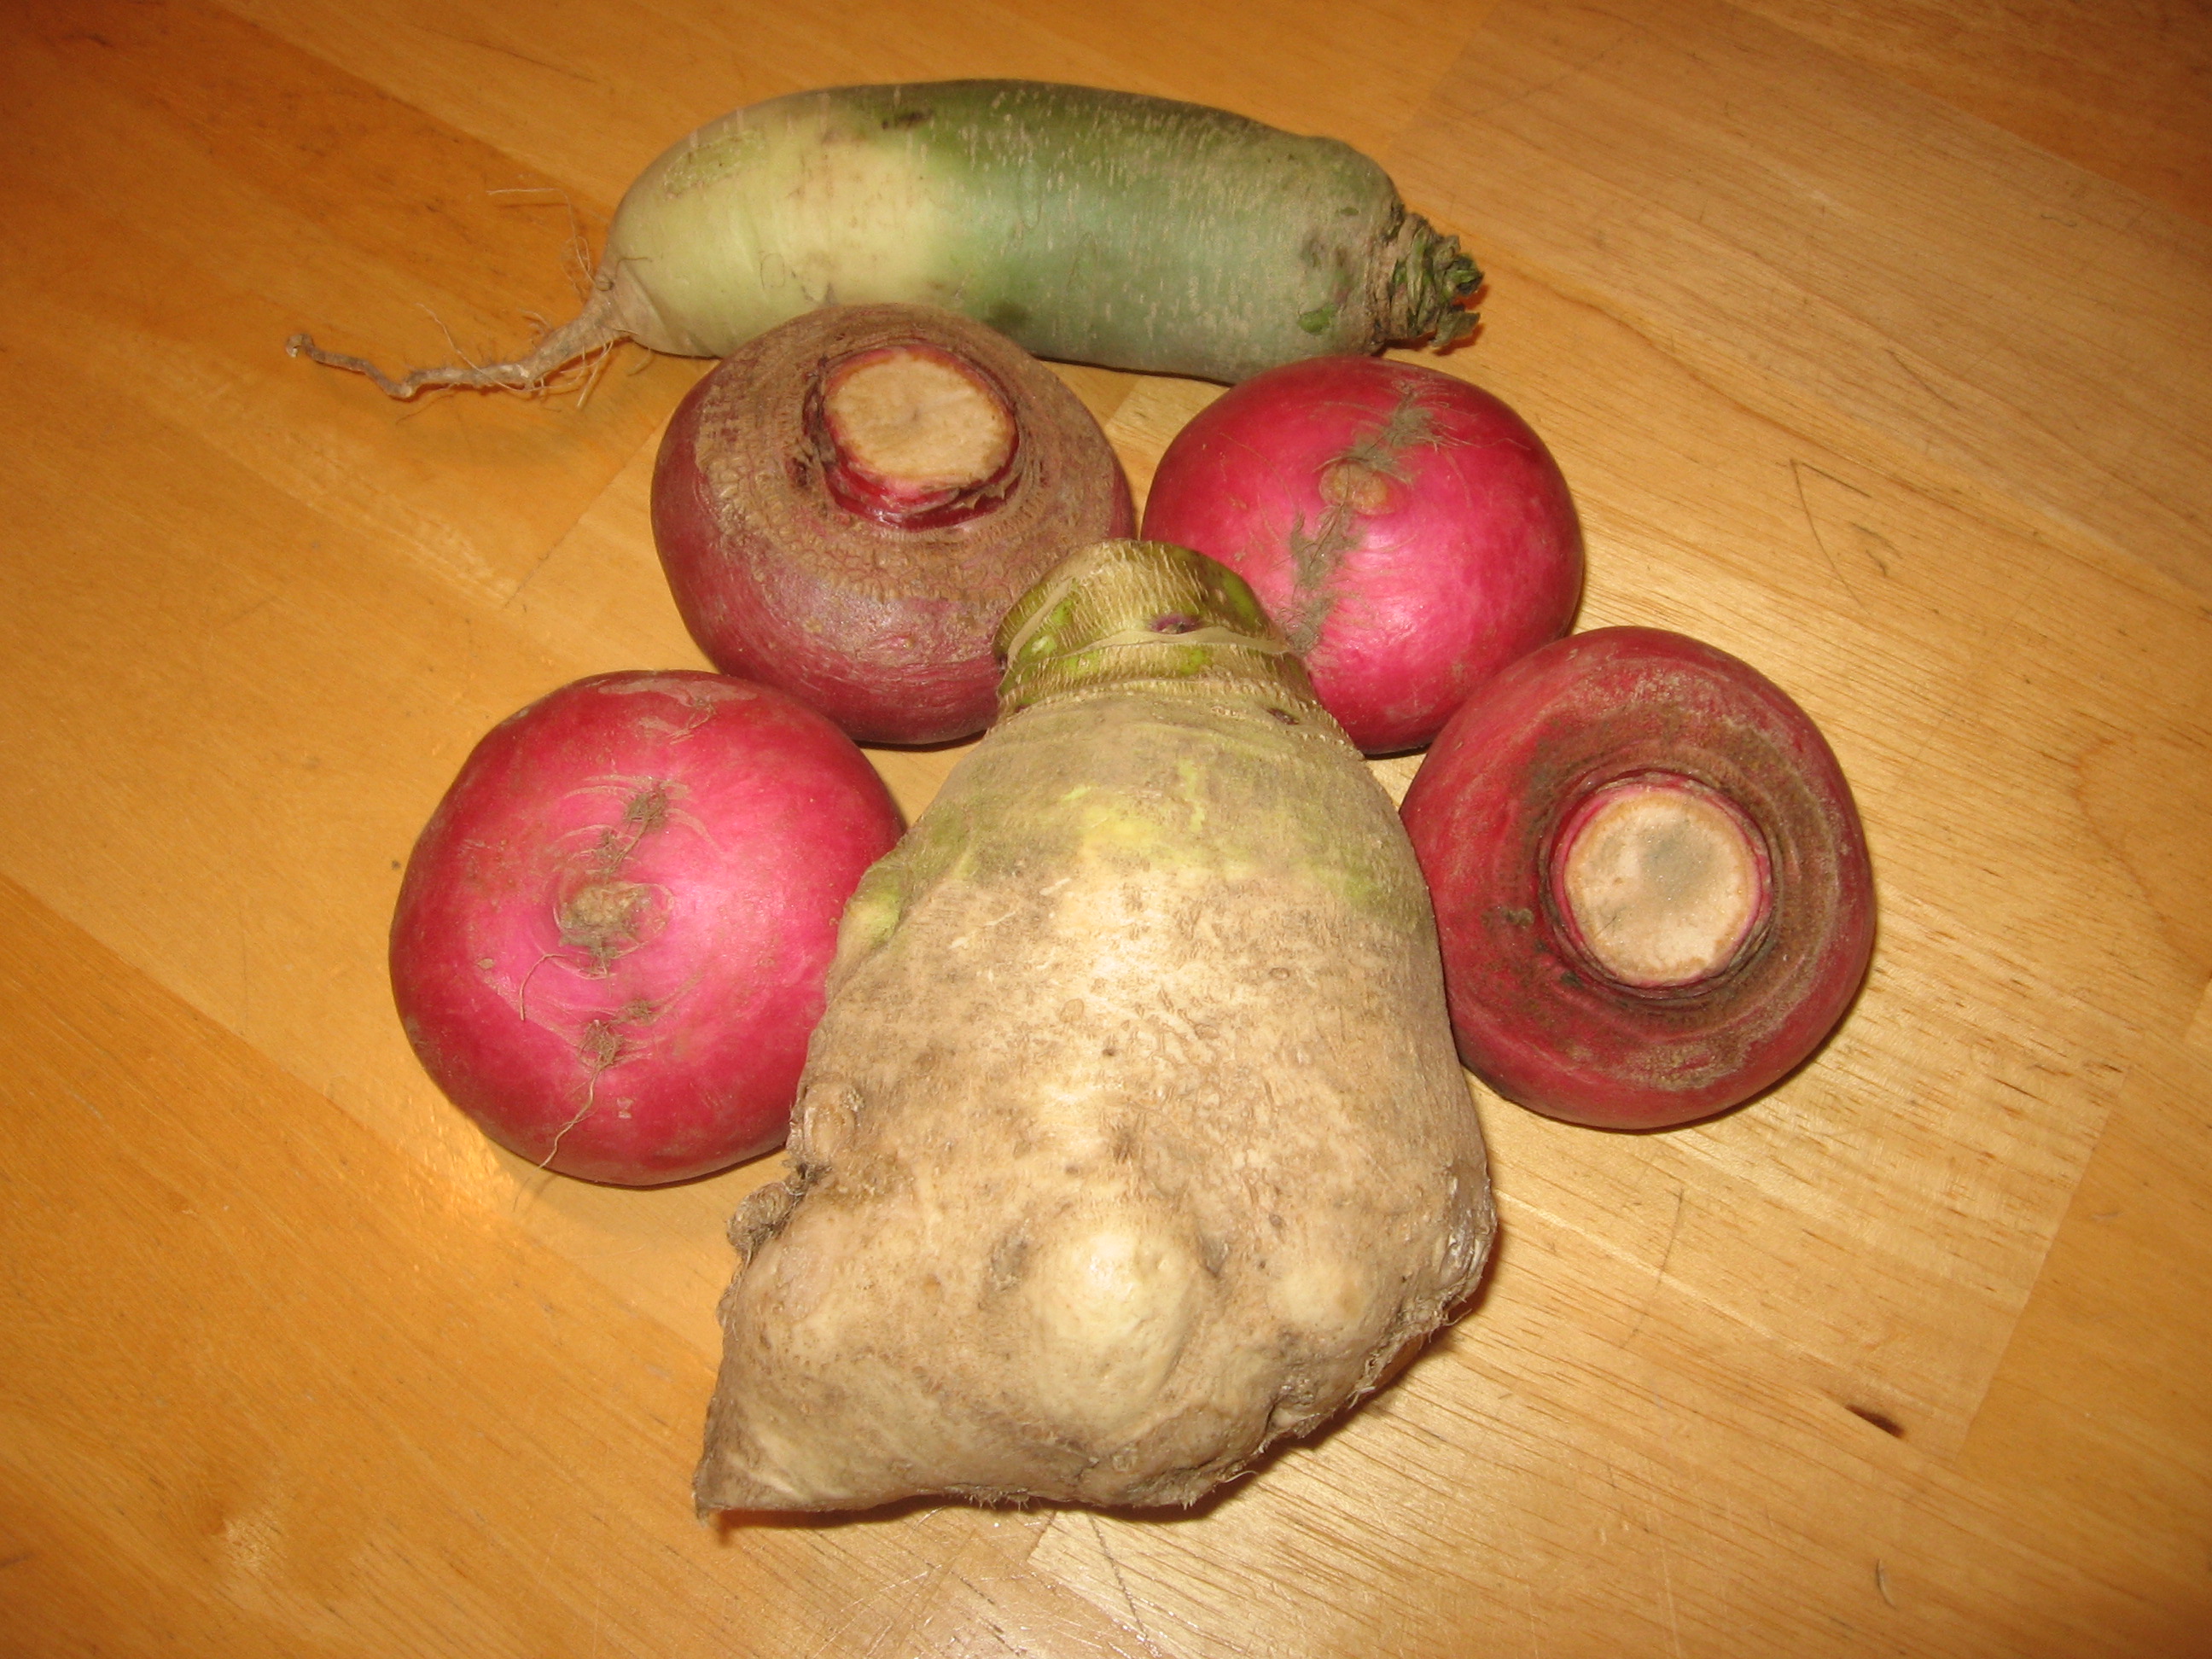 Three Types of Turnips